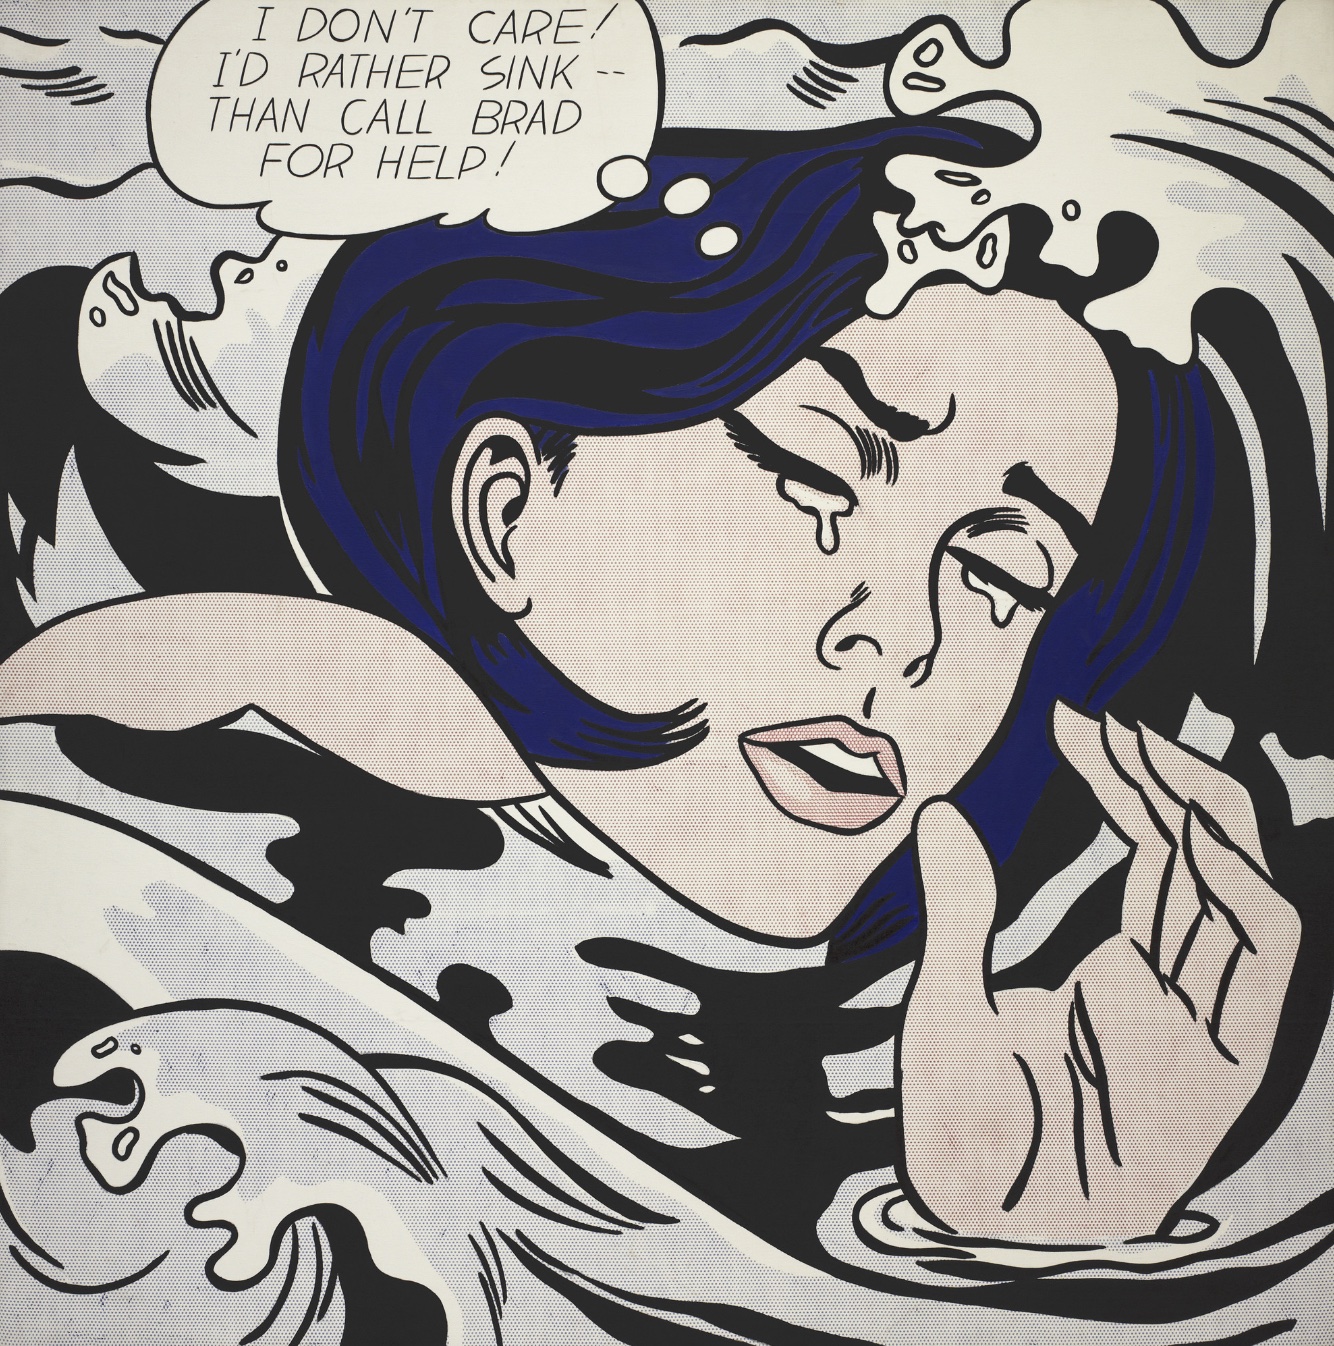 Roy Lichtenstein の Drowning Girl — 上の漫画の泣いている女性の画像が特徴です。